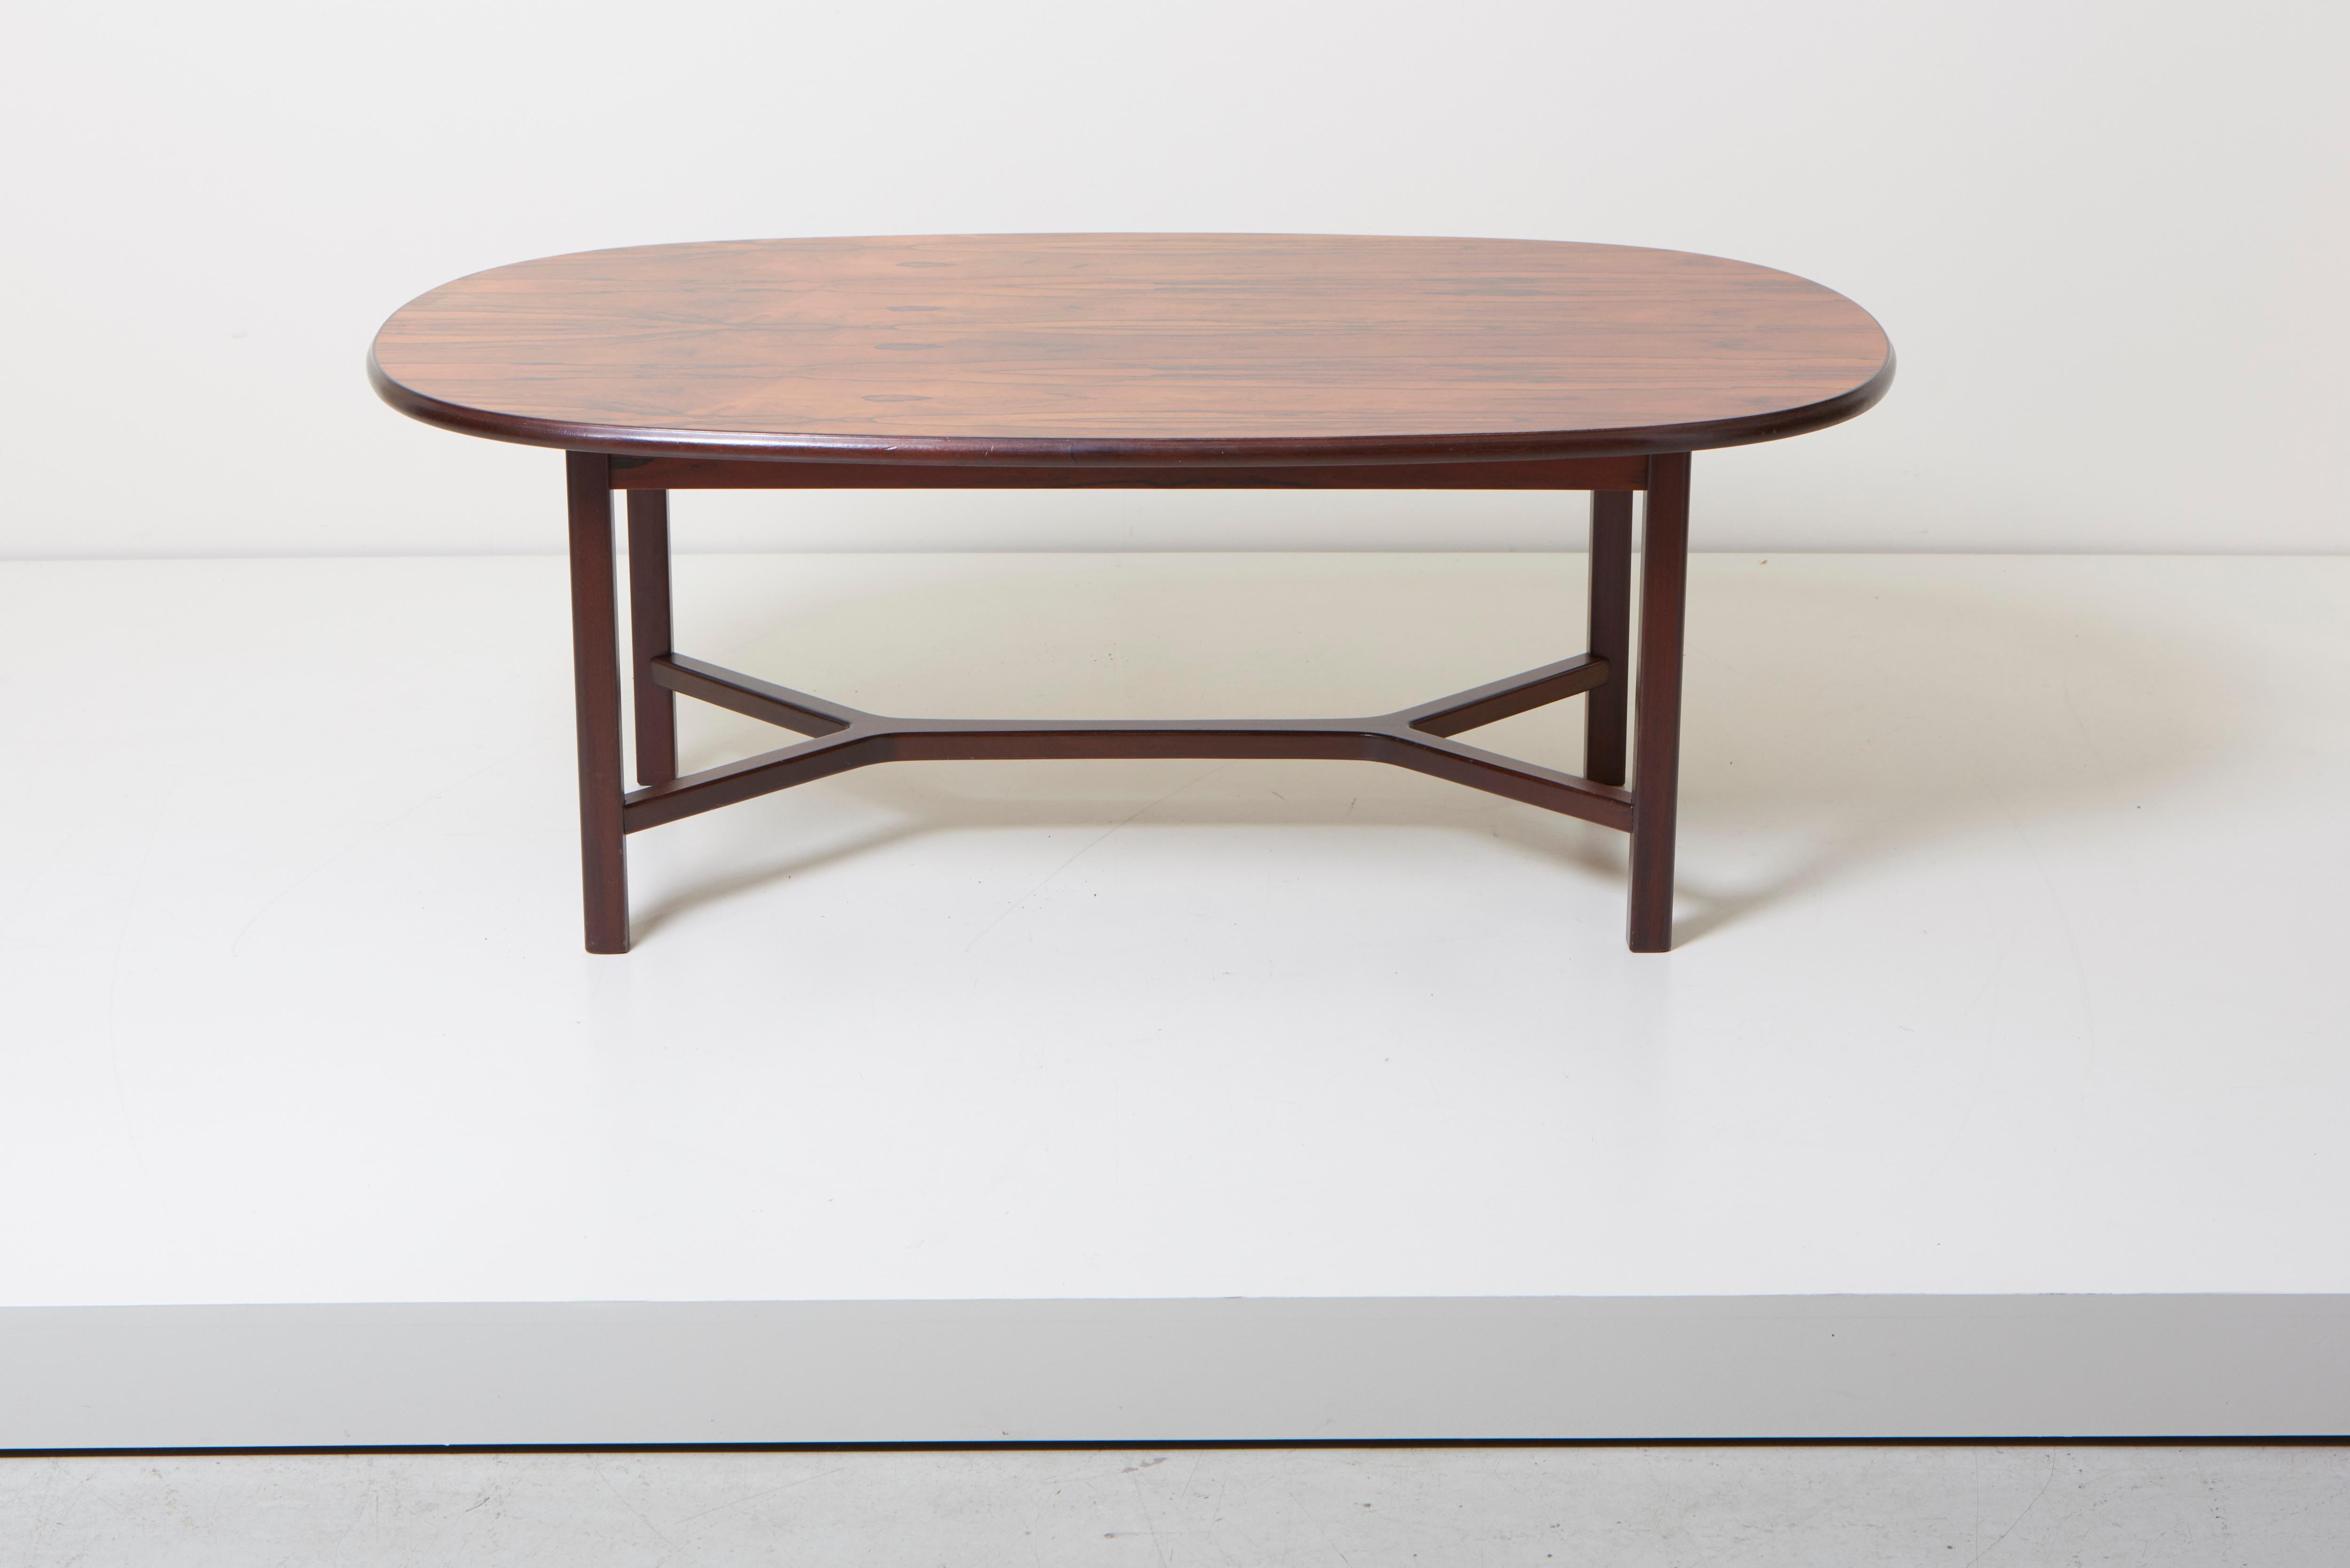 Large oval coffee table in wood designed by Norwegian designer Torbjørn Afdal for Bruksbo.